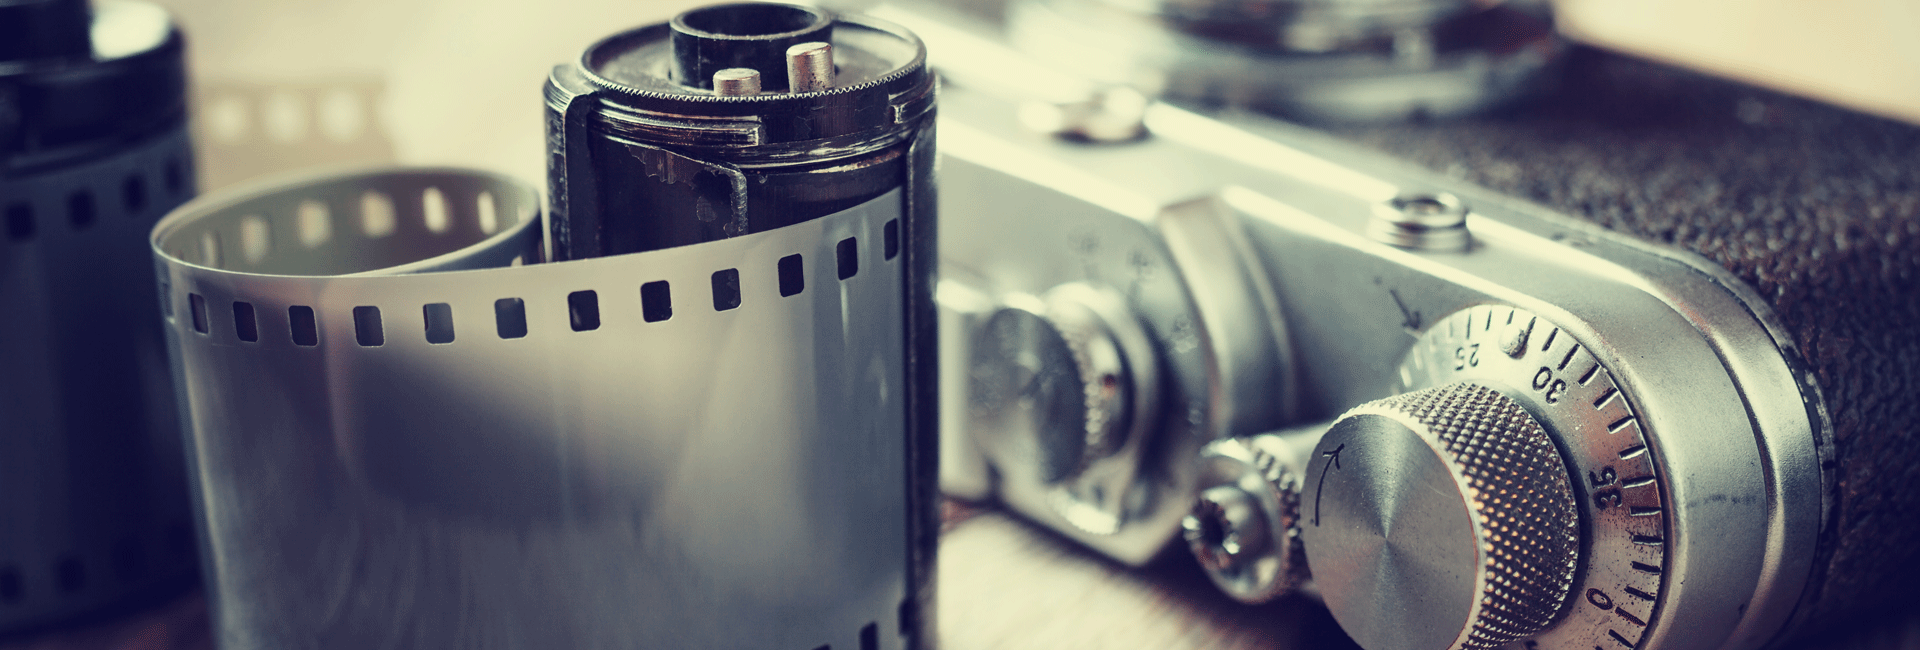 Photo Film Rolls and Retro Camera